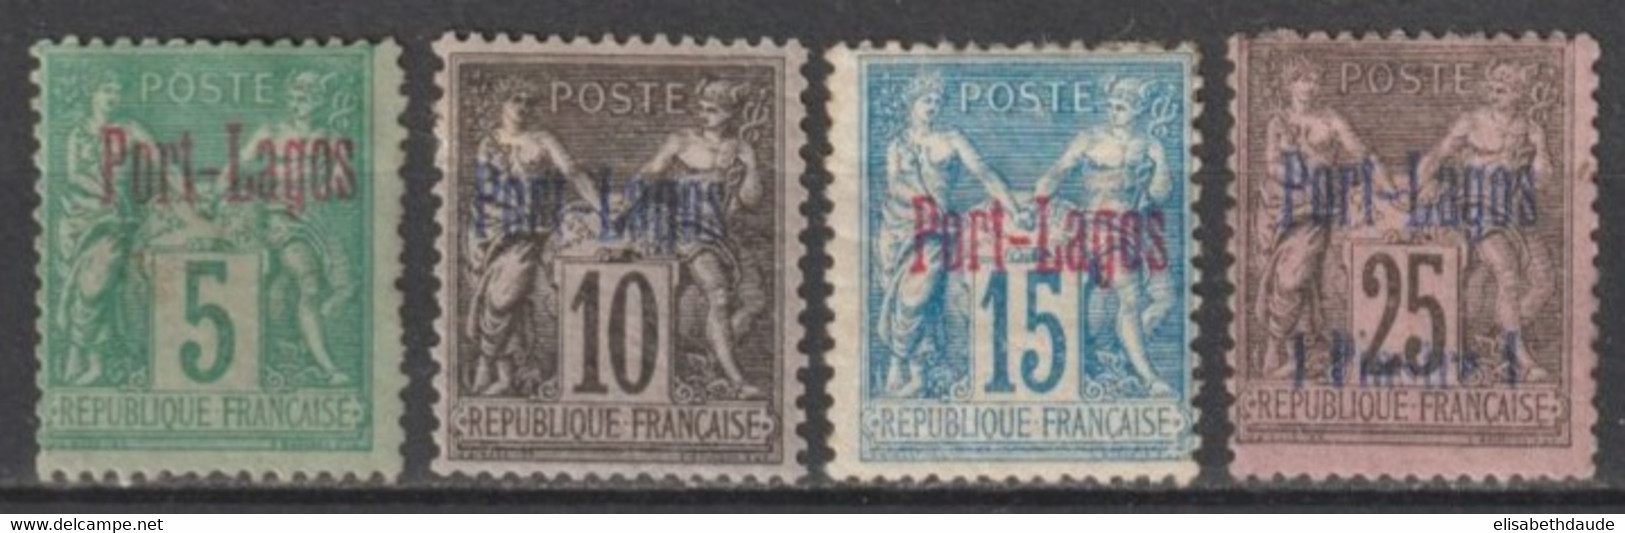 PORT LAGOS - 1893 - YVERT N° 1/4 * MH CHARNIERE ASSEZ FORTE - COTE = 335 EUR. - Nuovi